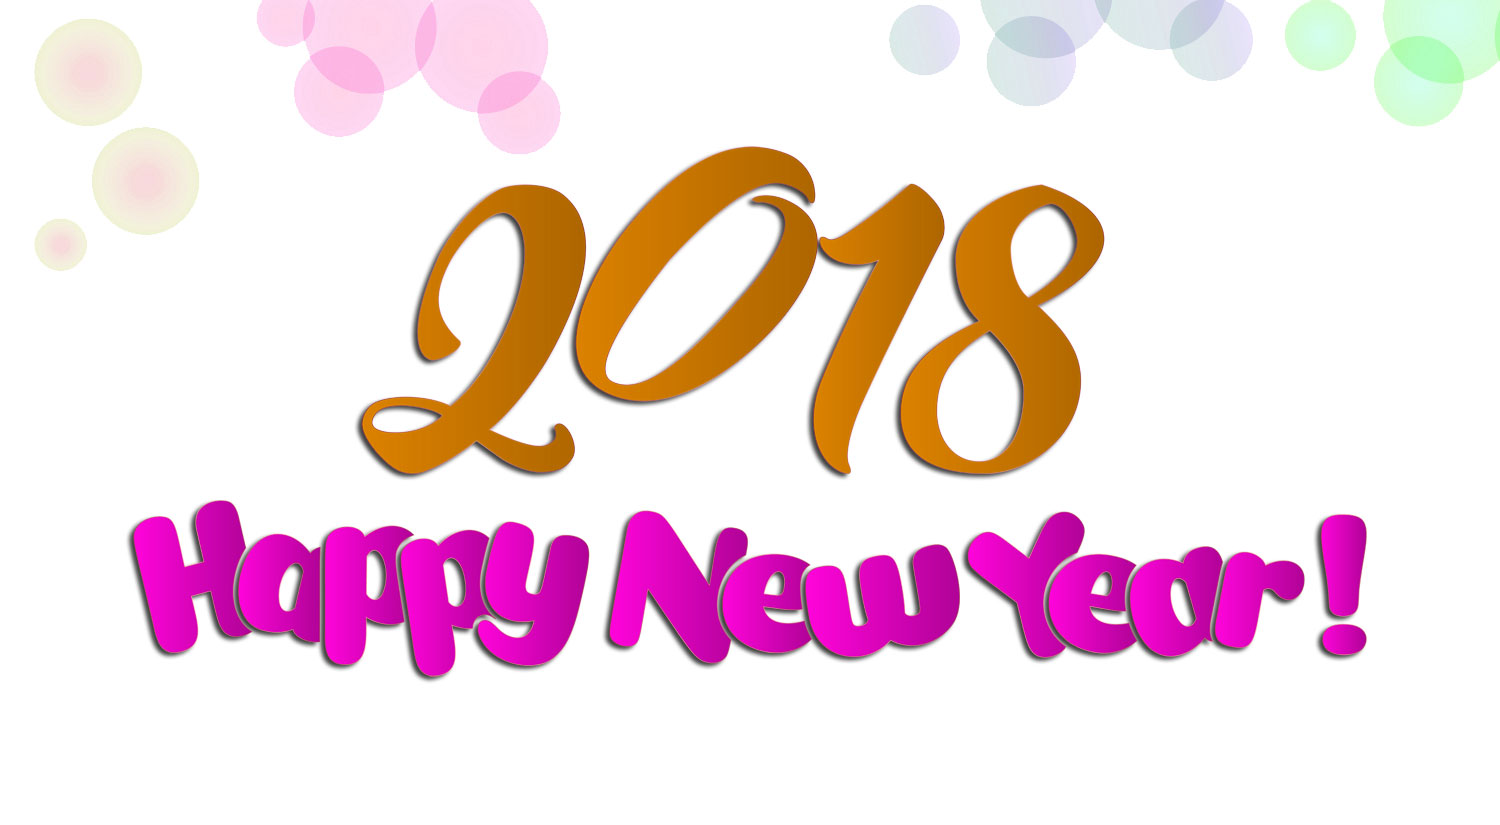 Happy New Year 2018 Wallpaper Hd Free